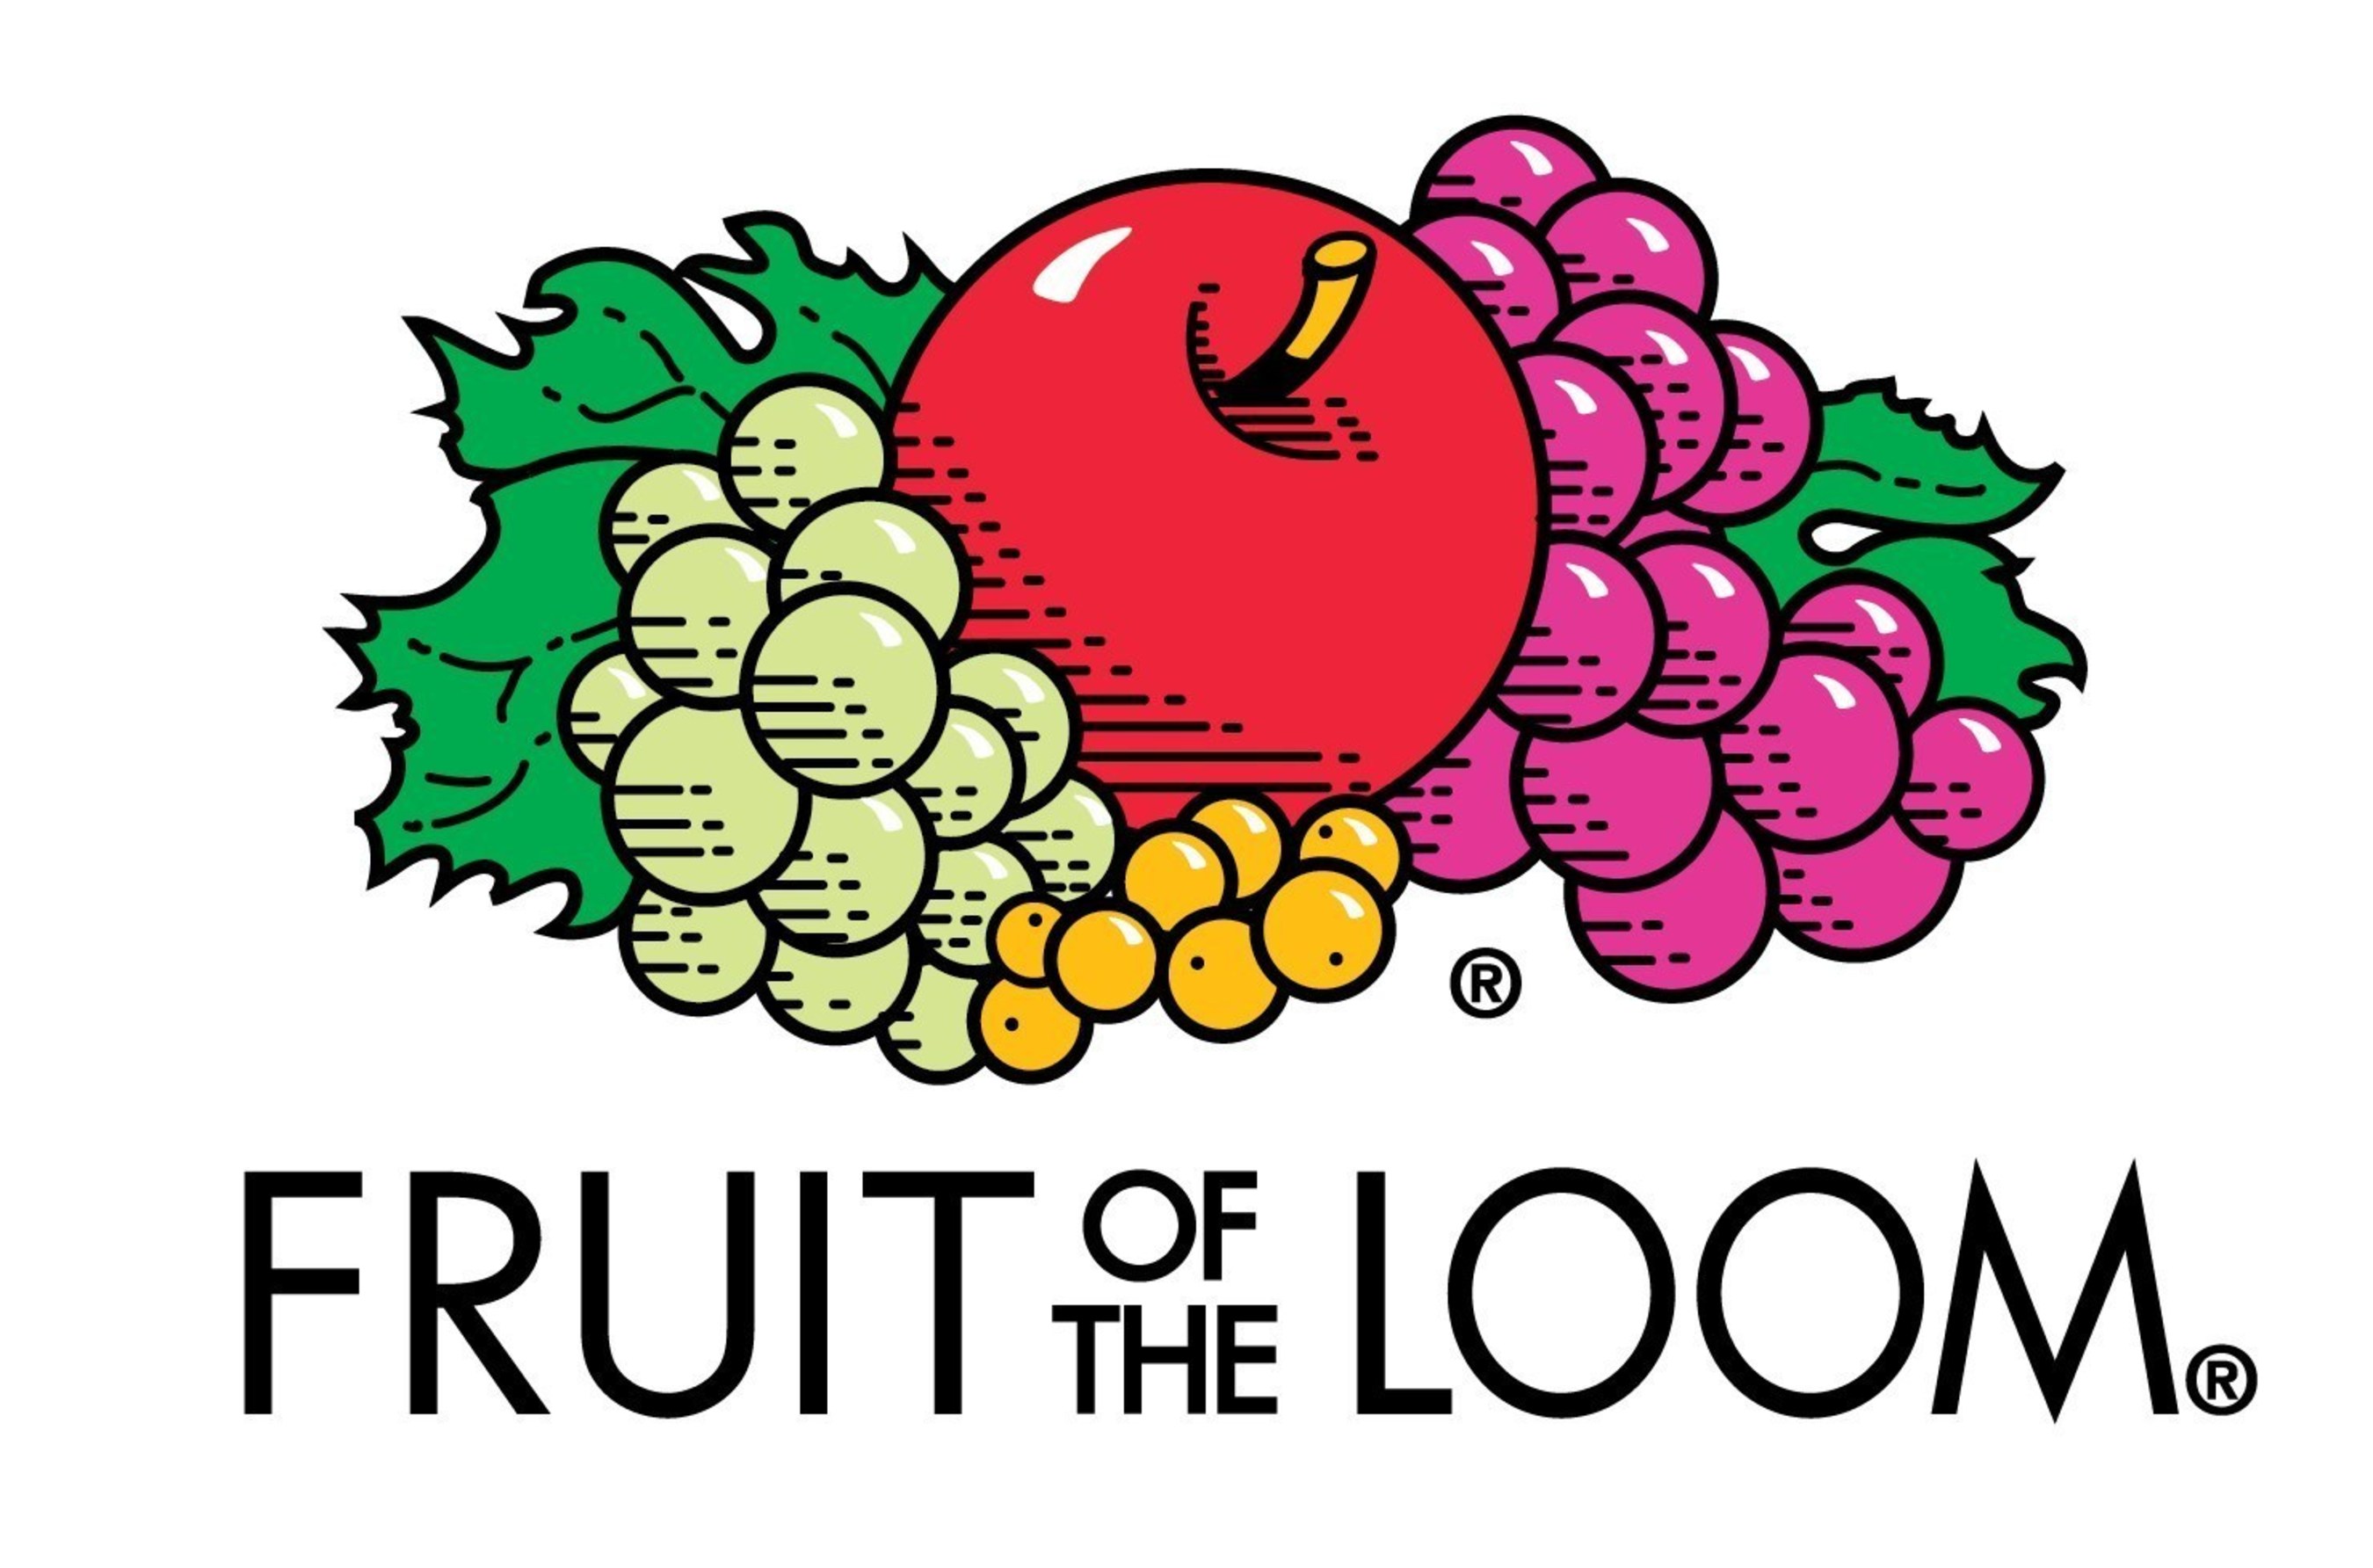 Fruit of the loom Logos